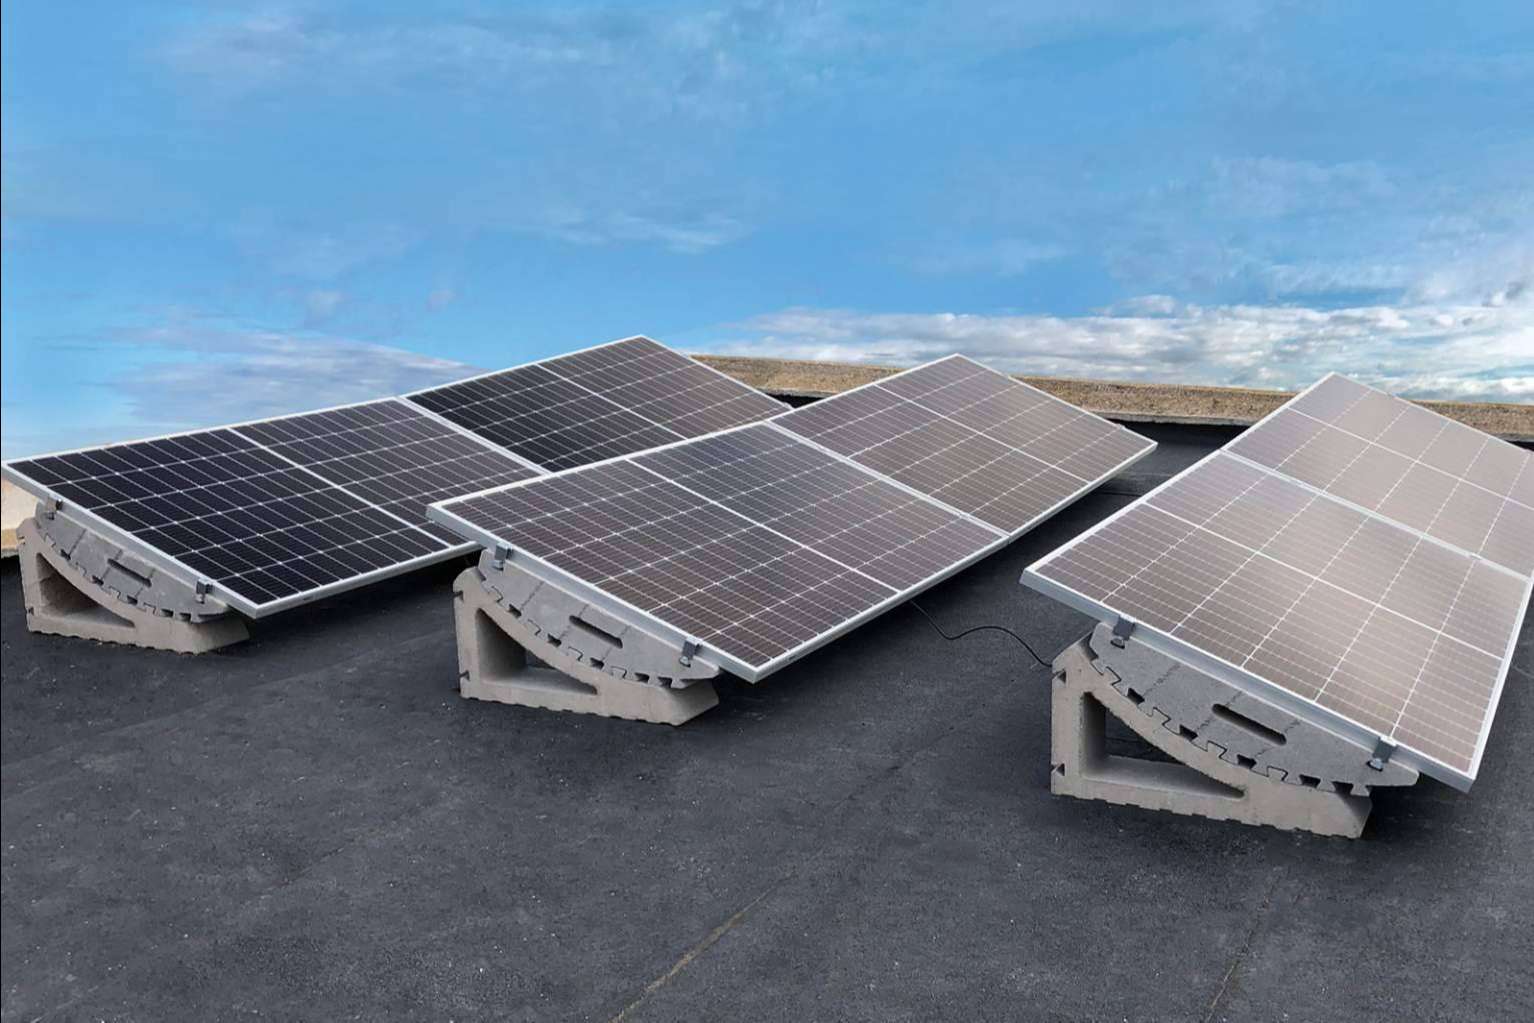 Nuevo soporte patentado para paneles solares, por Verniprens